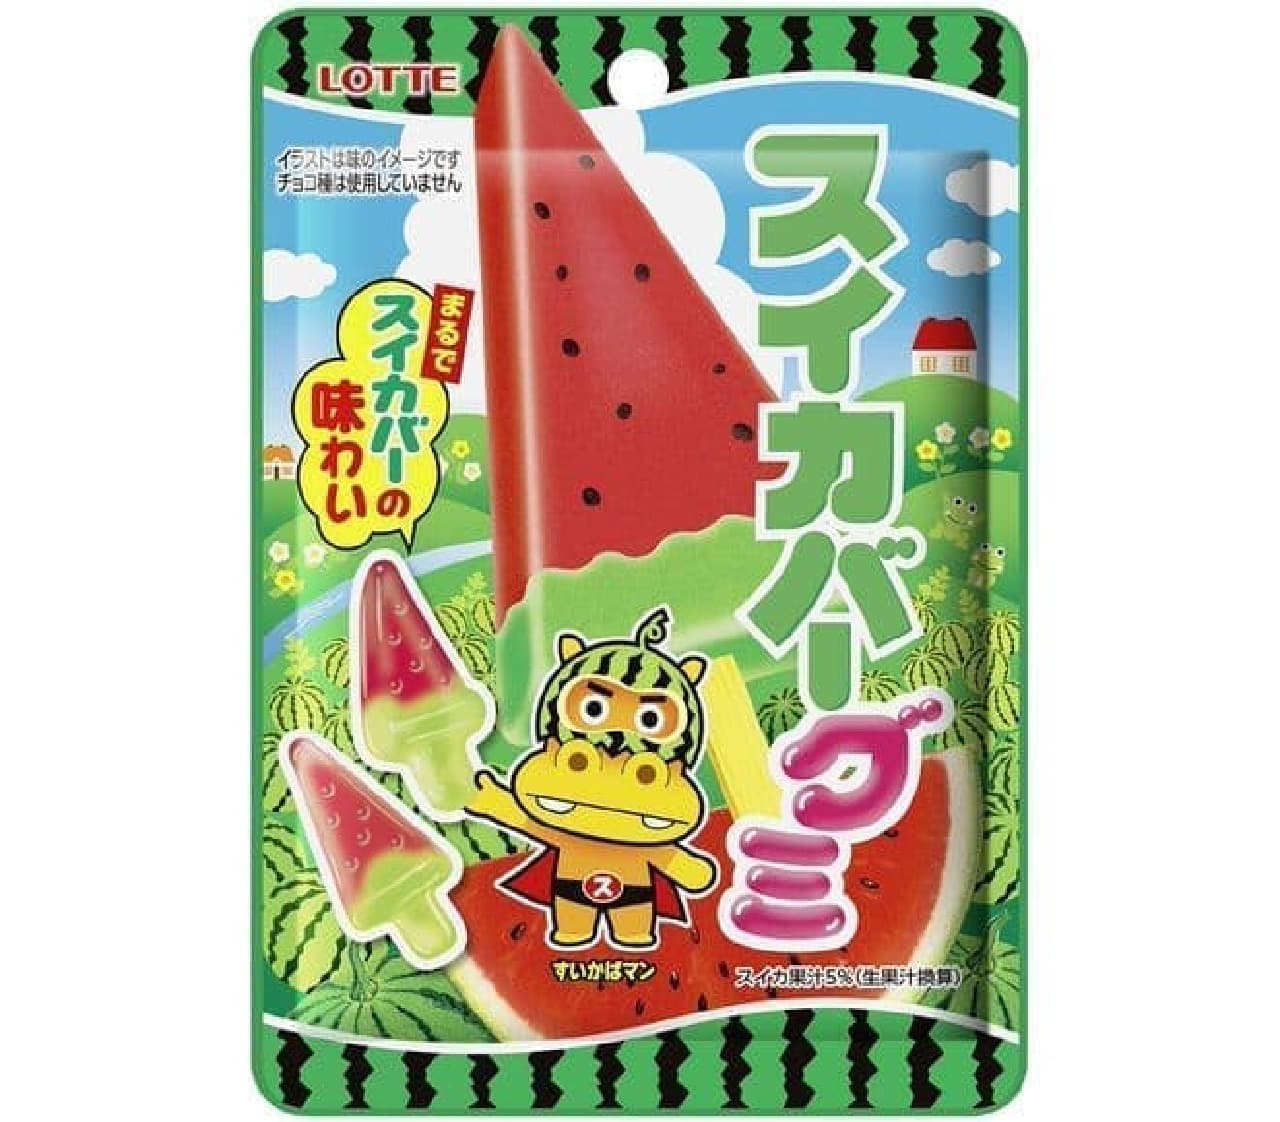 Lotte "Suica Gummy"